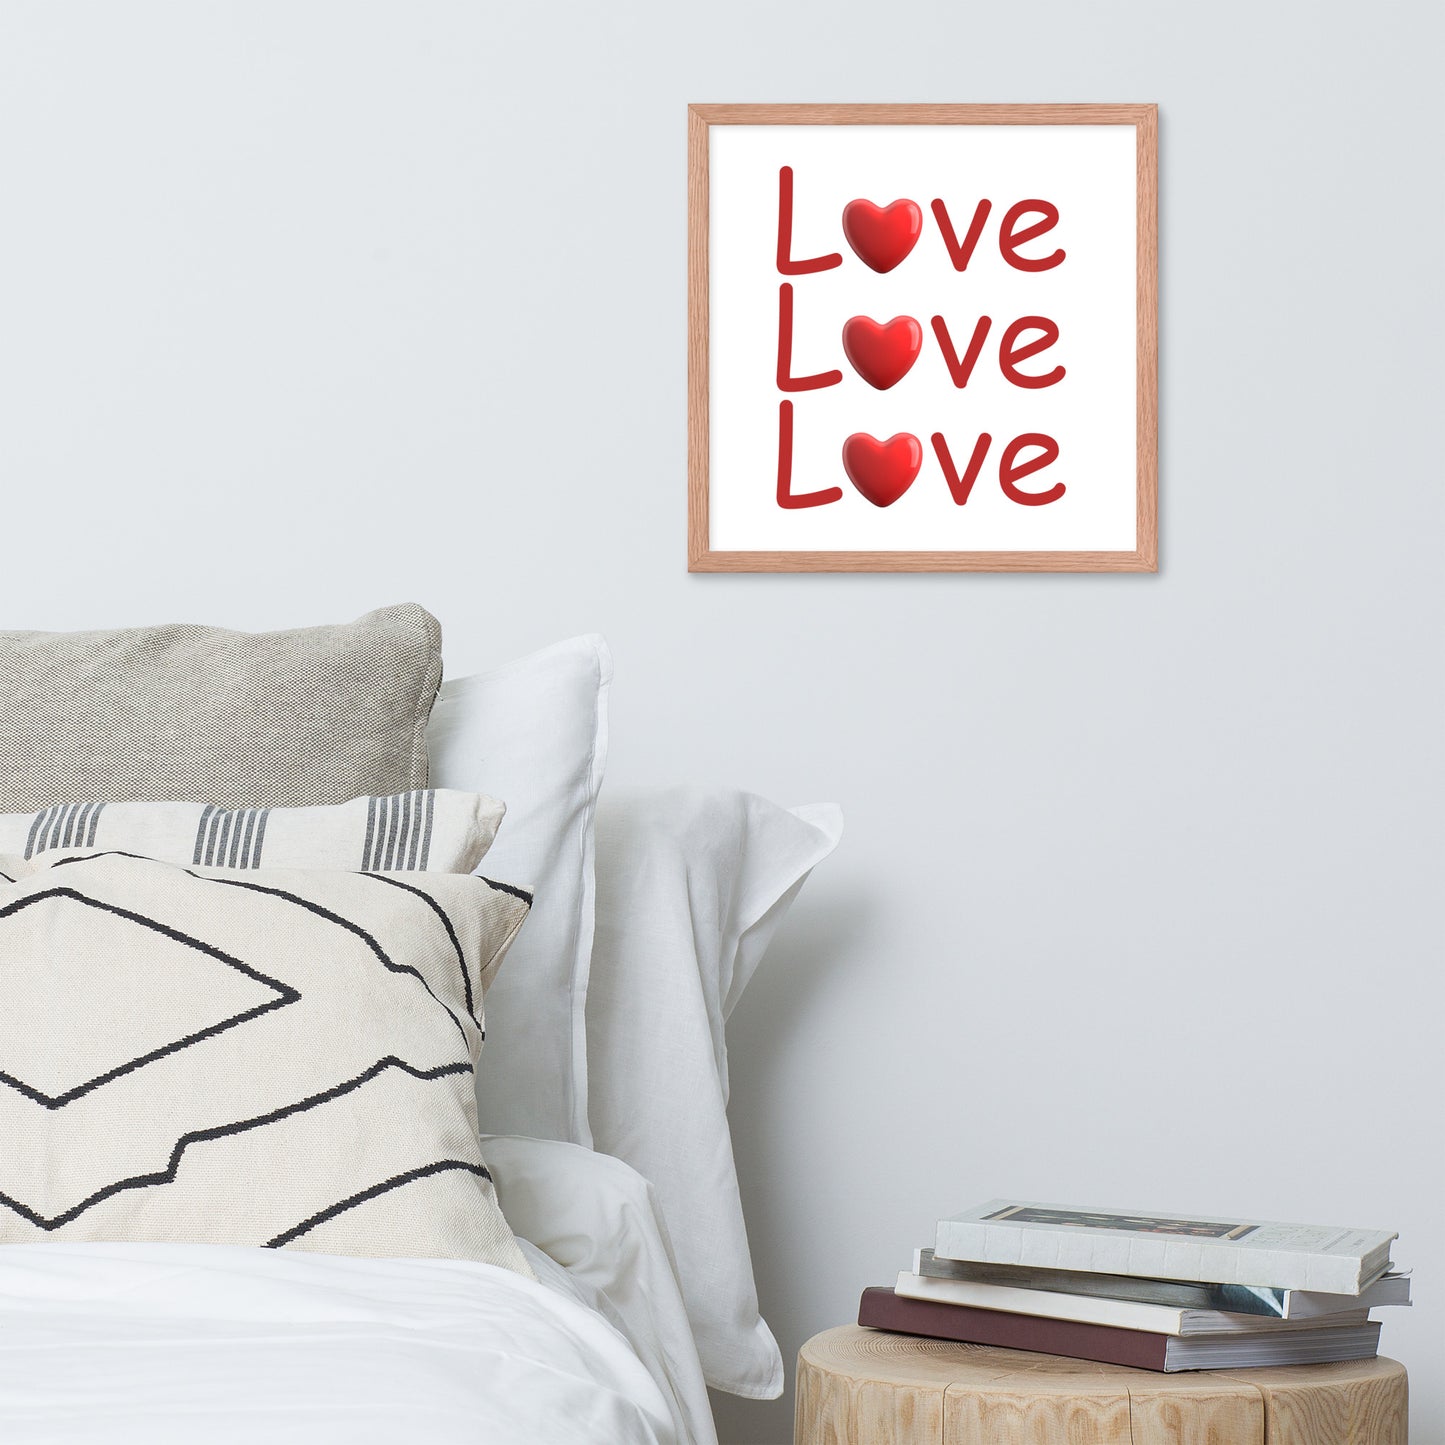 Framed Poster (Love Love Love - Love Framed Poster Vertical Model 0010)